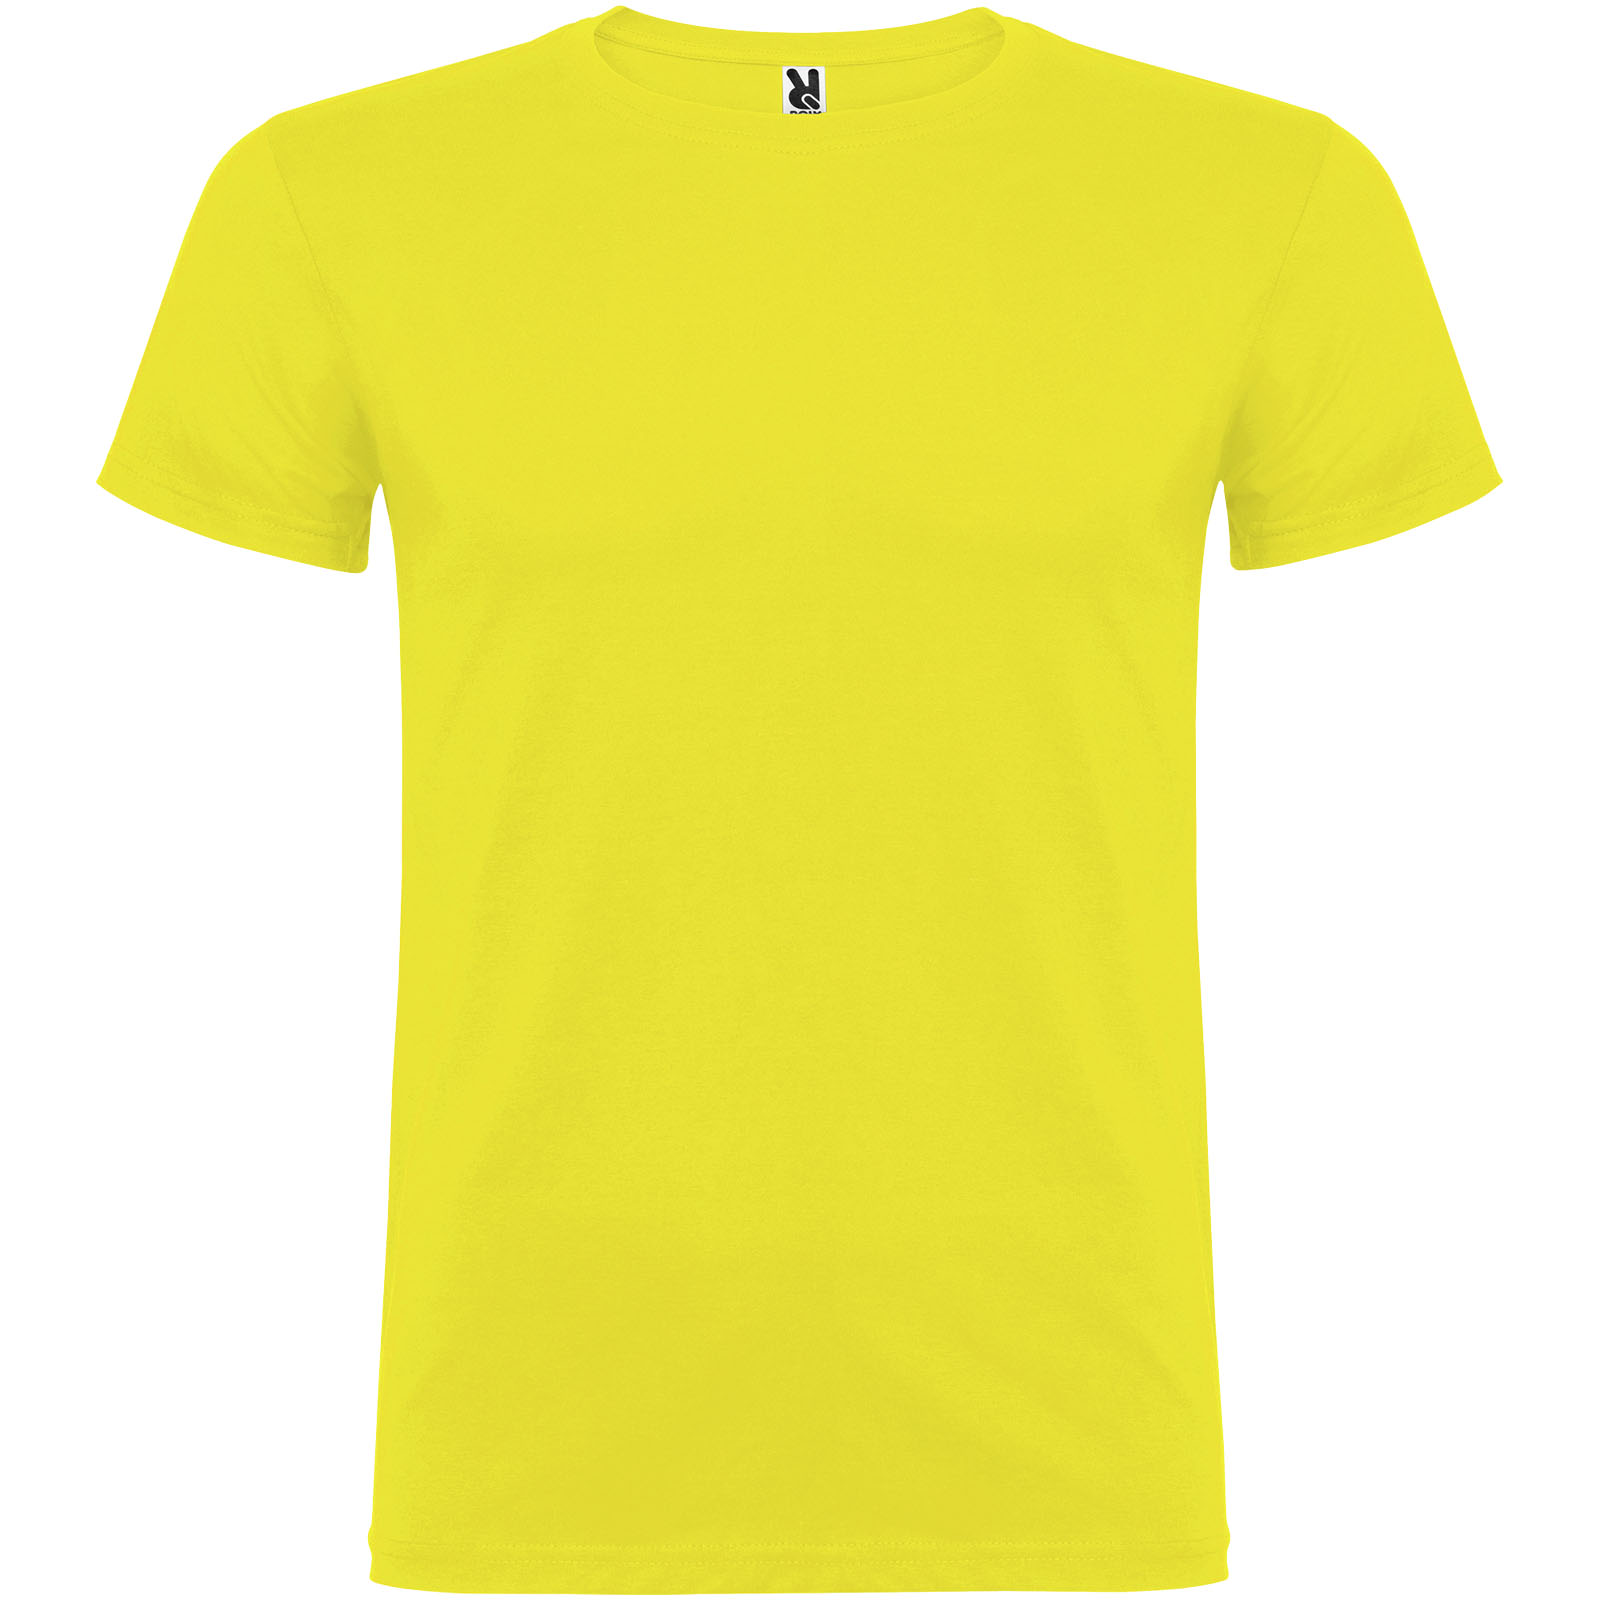 Beagle Kurzarm Kinder-T-Shirt - Billerbeck 